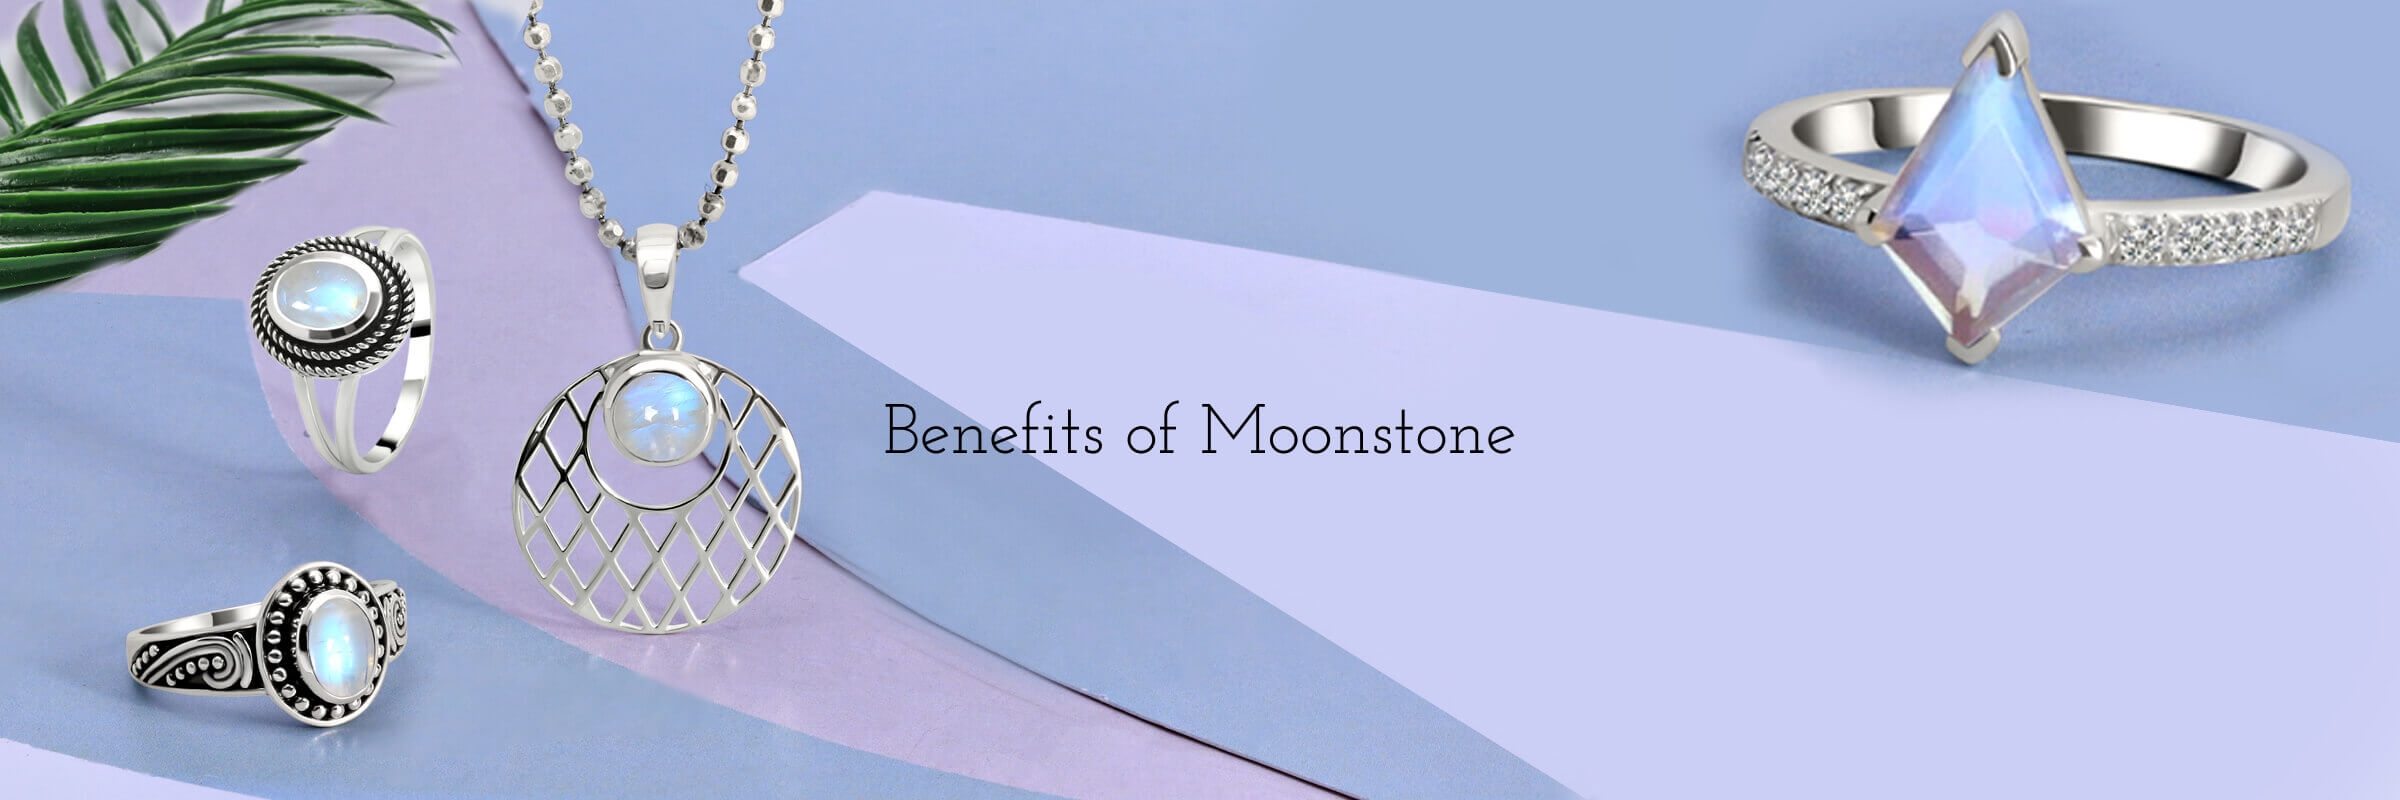 Benefits of Moonstone